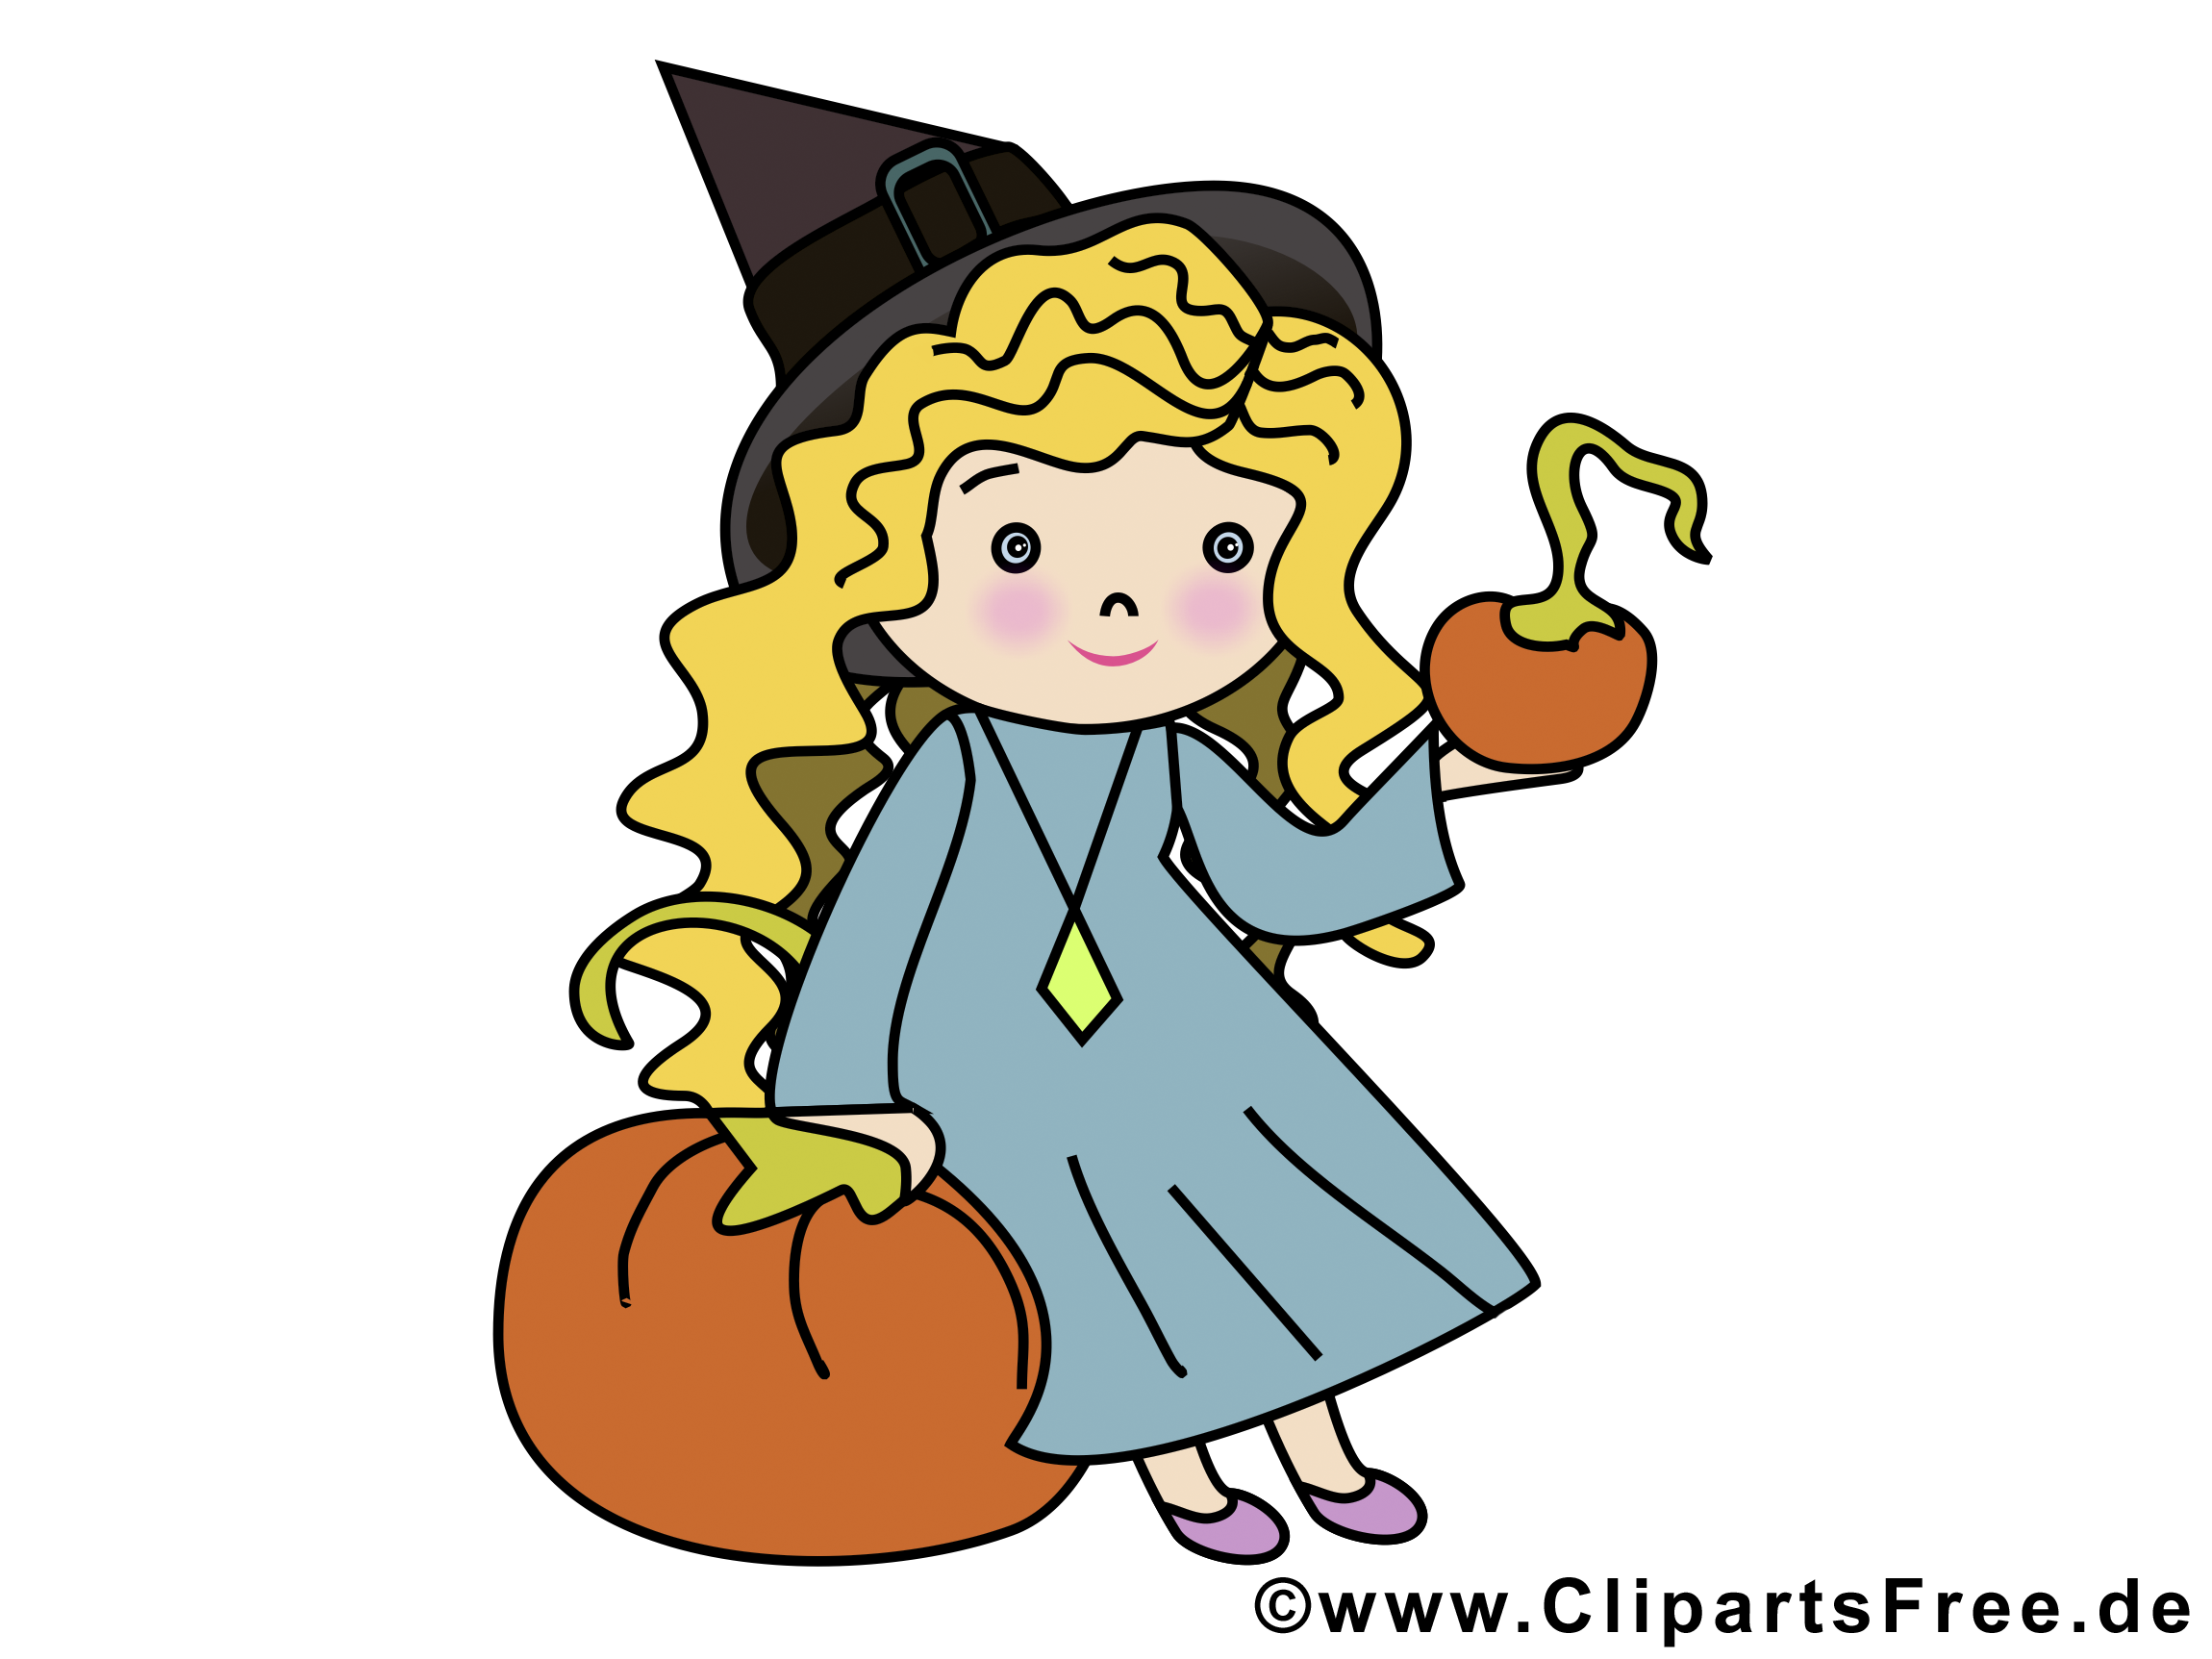 Fille citrouille clip art gratuit - Halloween dessin